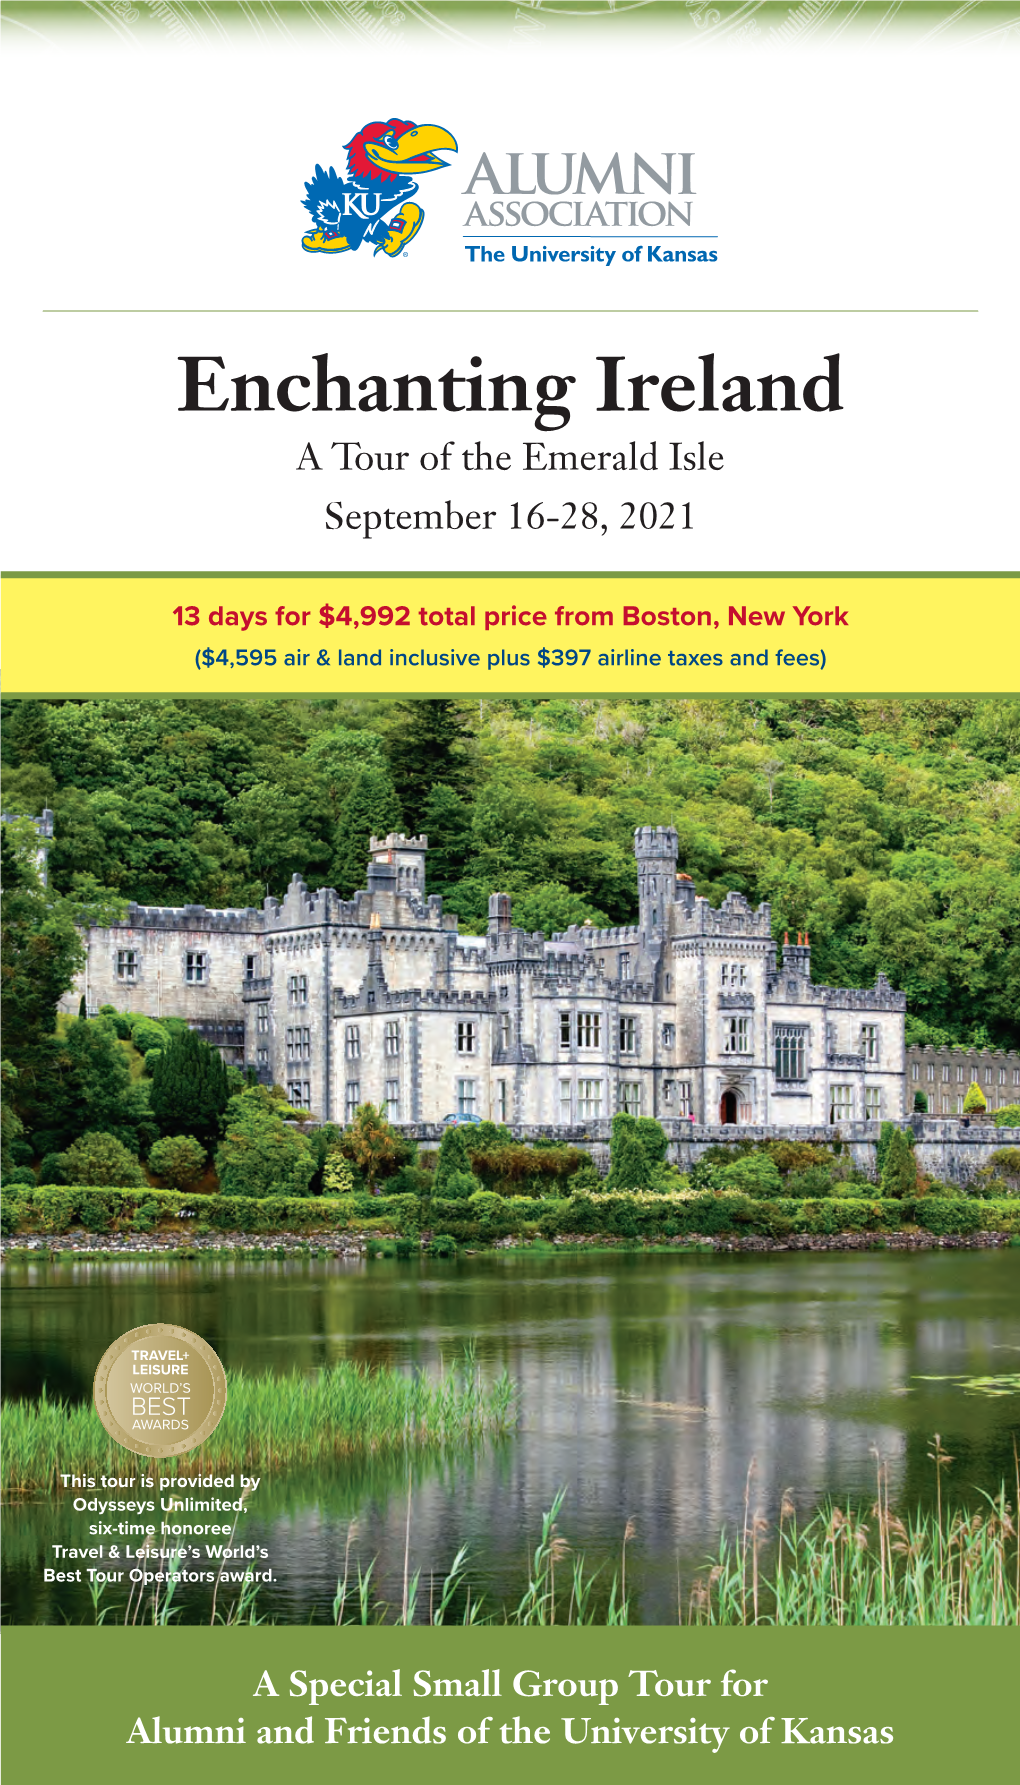 Enchanting Ireland a Tour of the Emerald Isle September 16-28, 2021